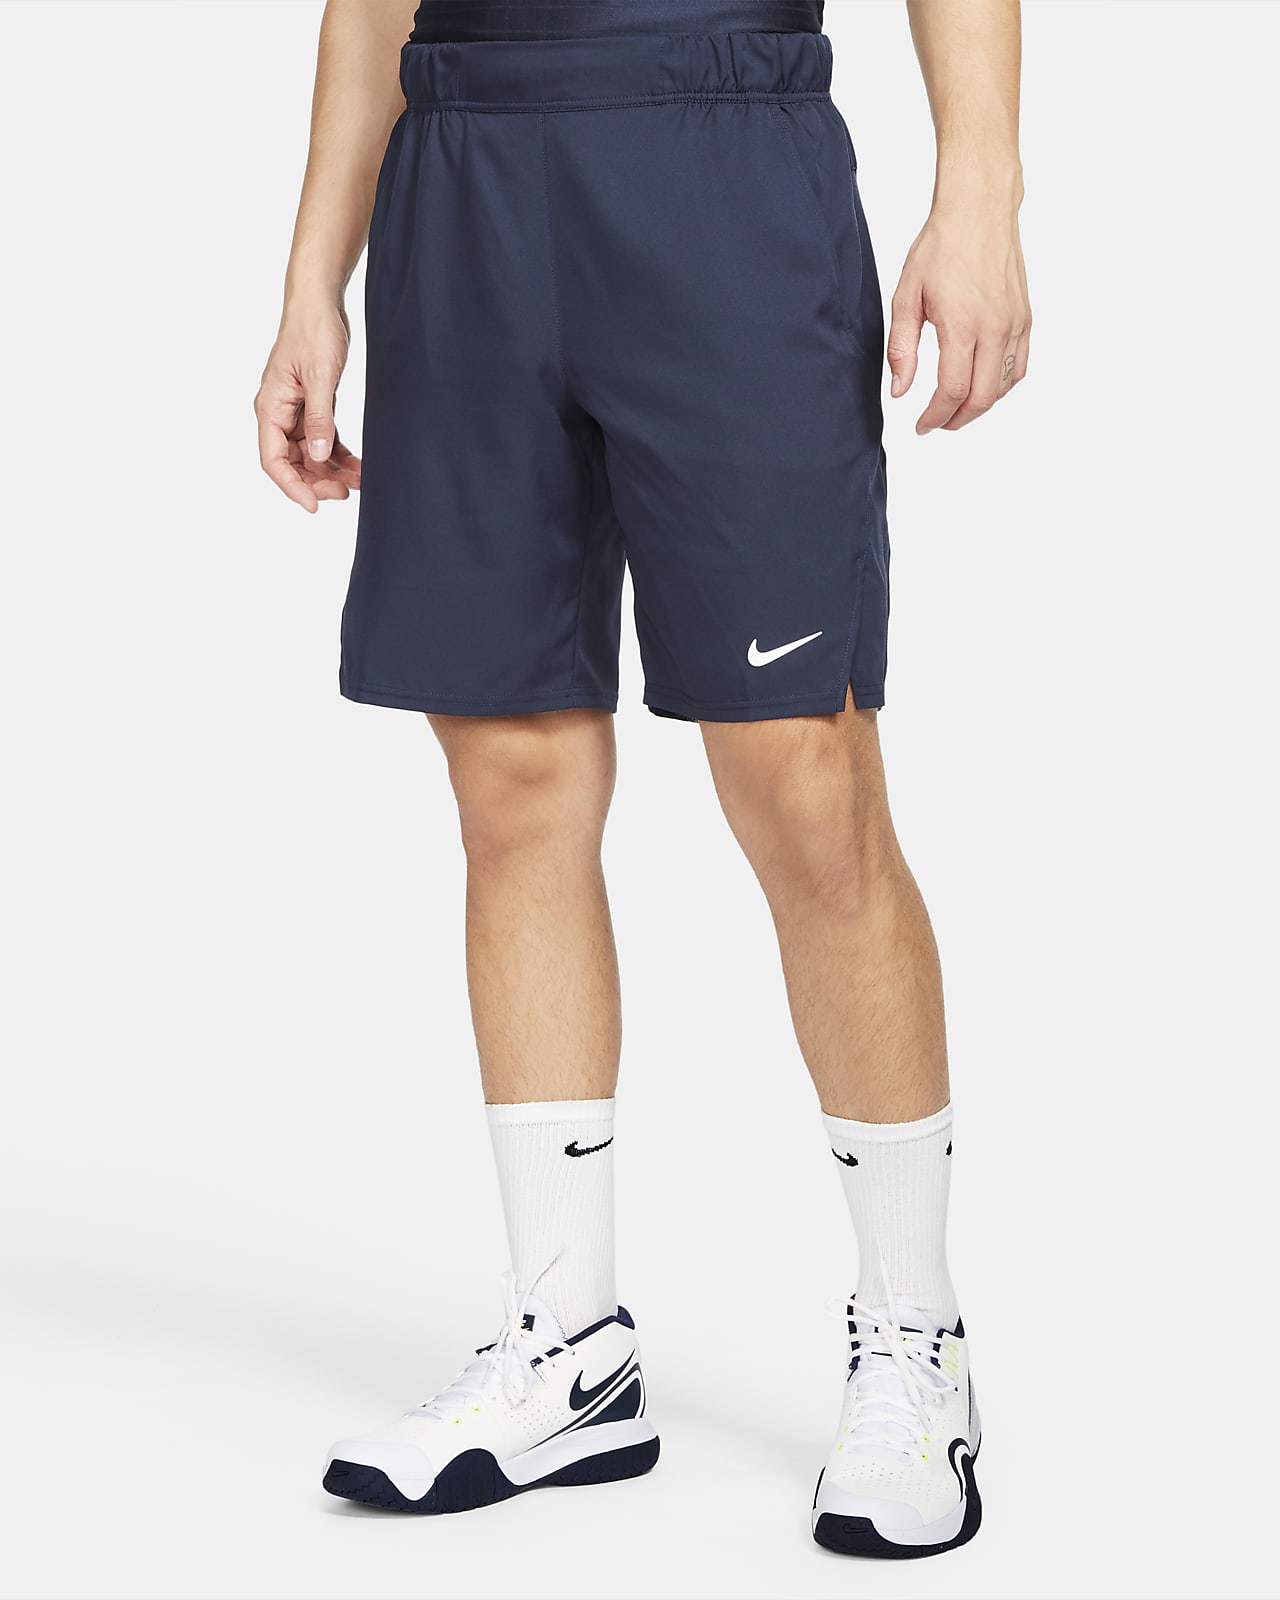 nike white tennis shorts mens